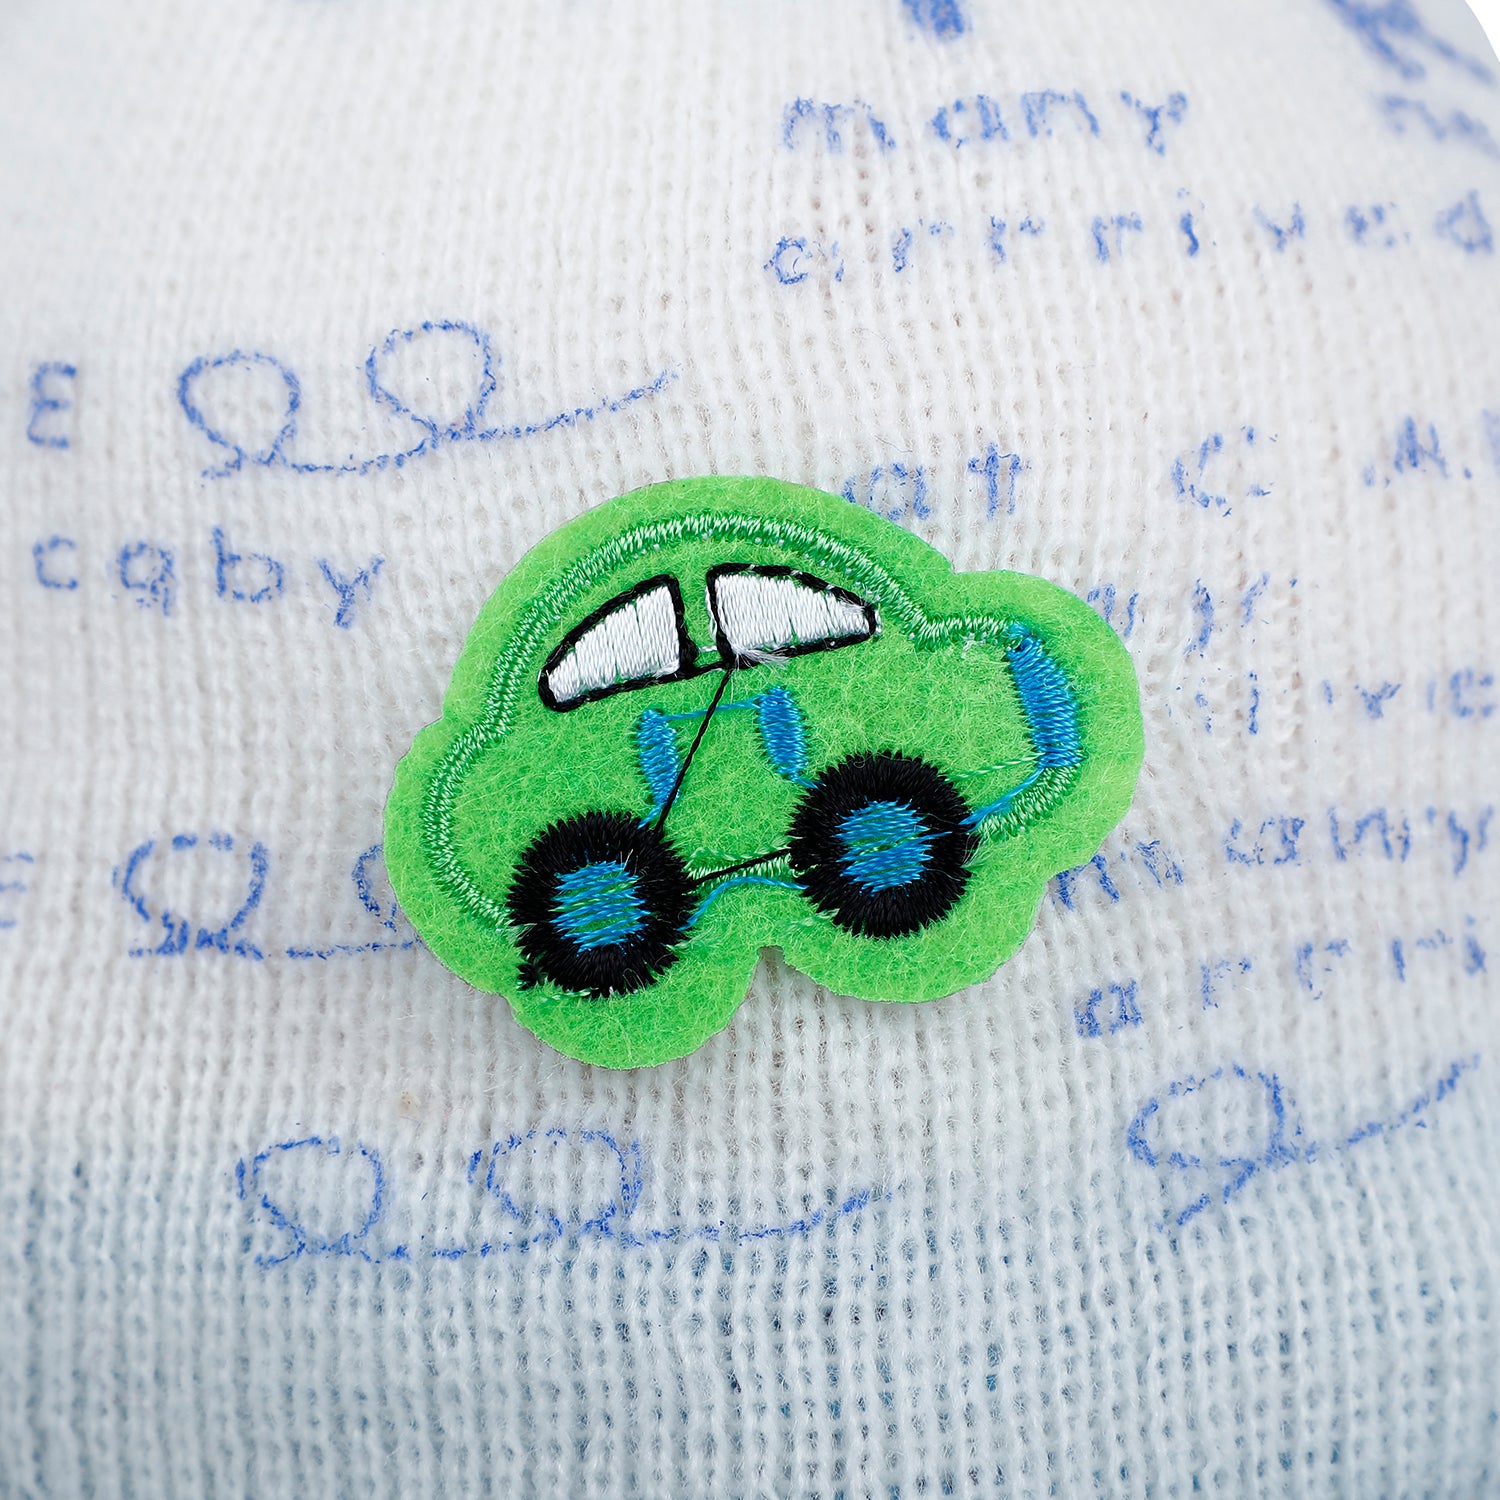 Baby Moo Car Pom Pom Breathable Beanie Warm Knitted Woollen Cap - Blue